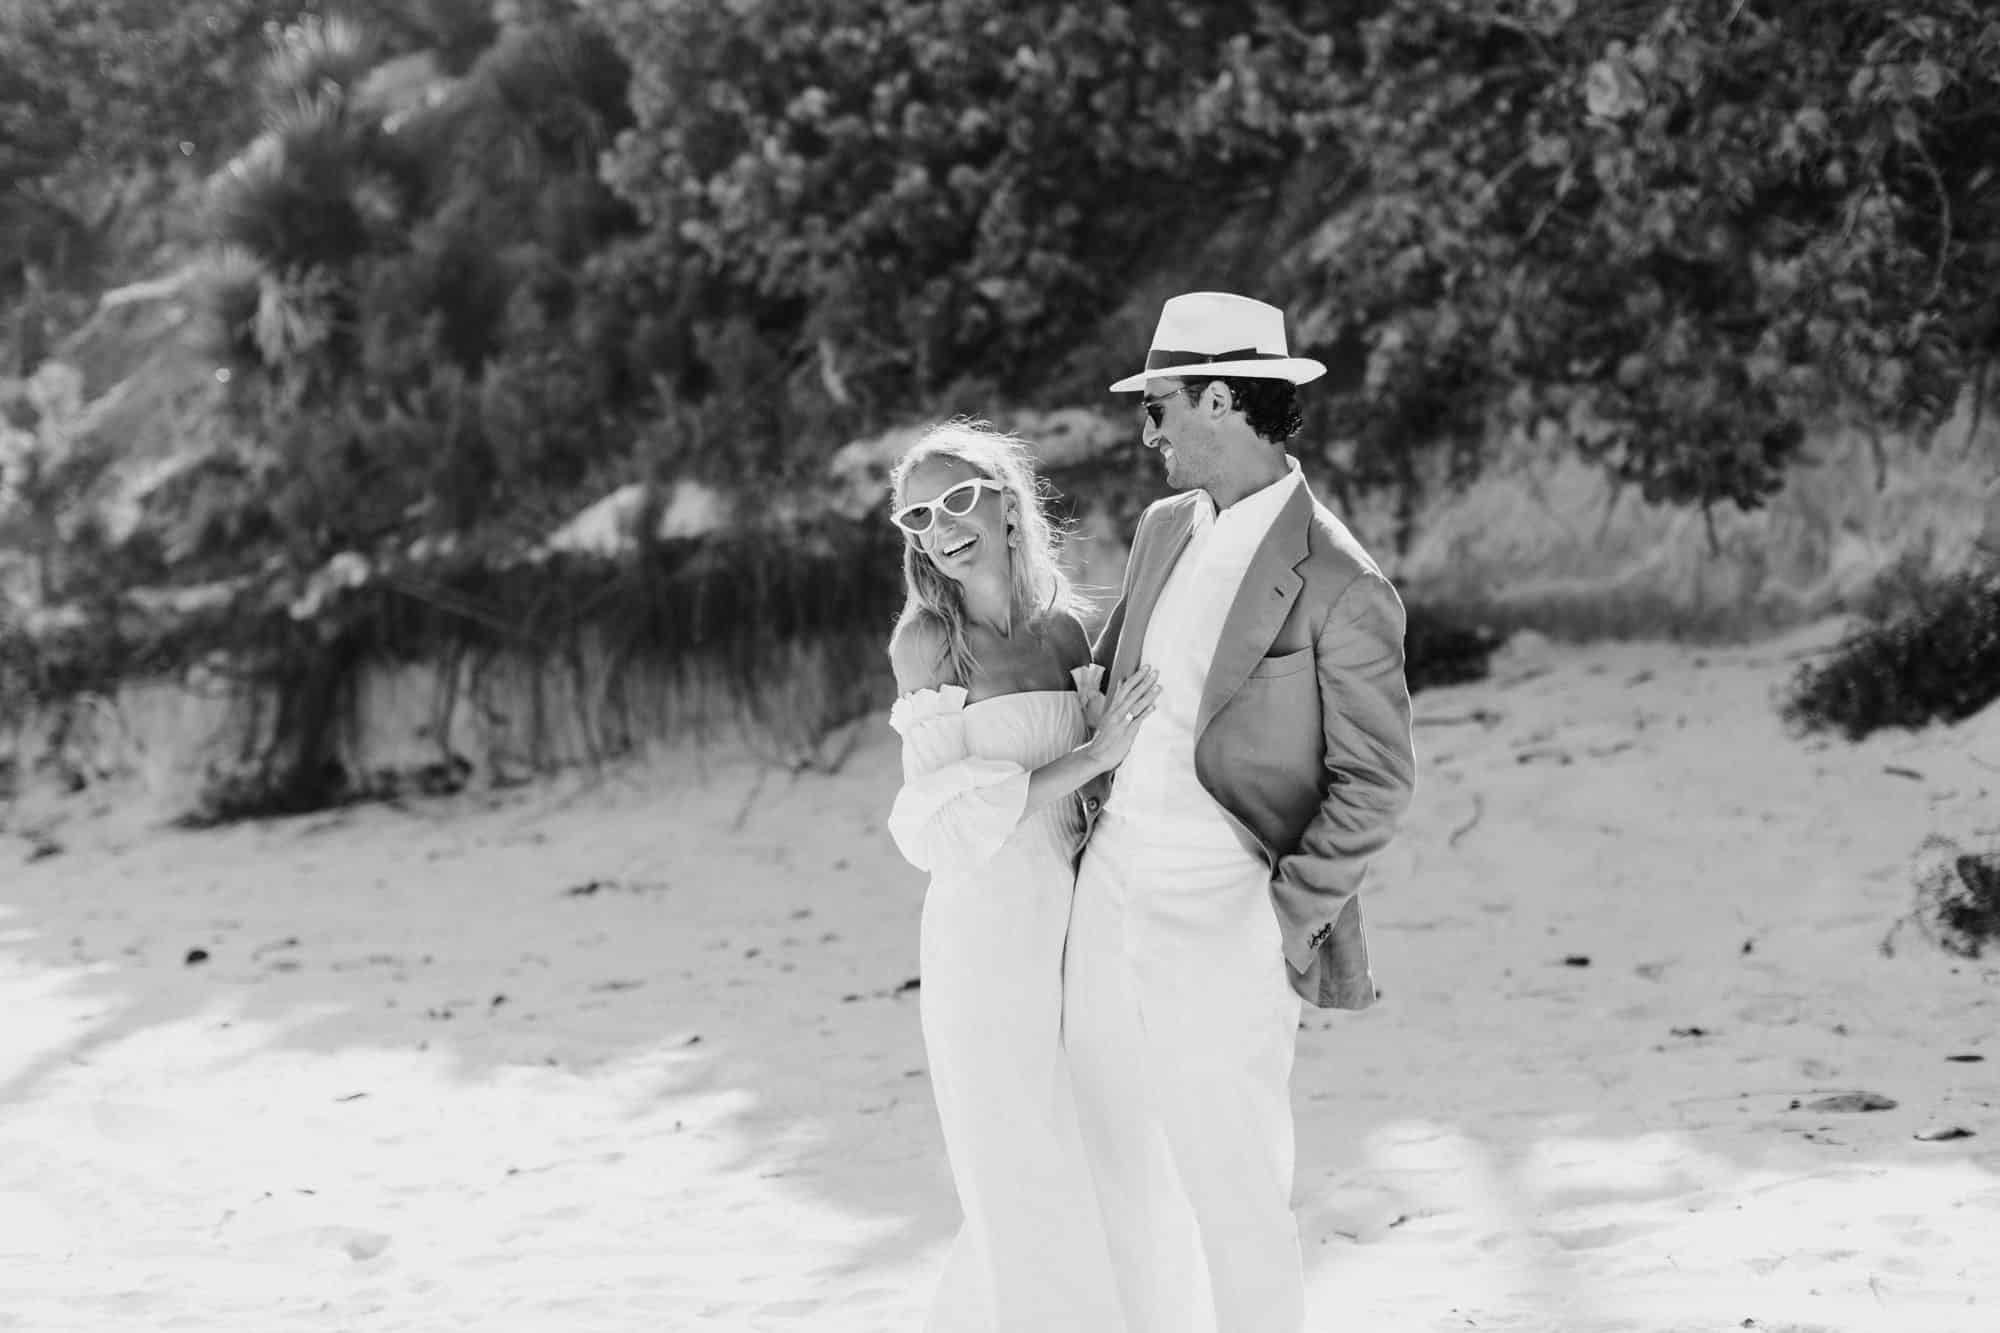 Coral Beach Club Bermuda Wedding - Caribbean Destination Wedding Photographers - The Light + Color